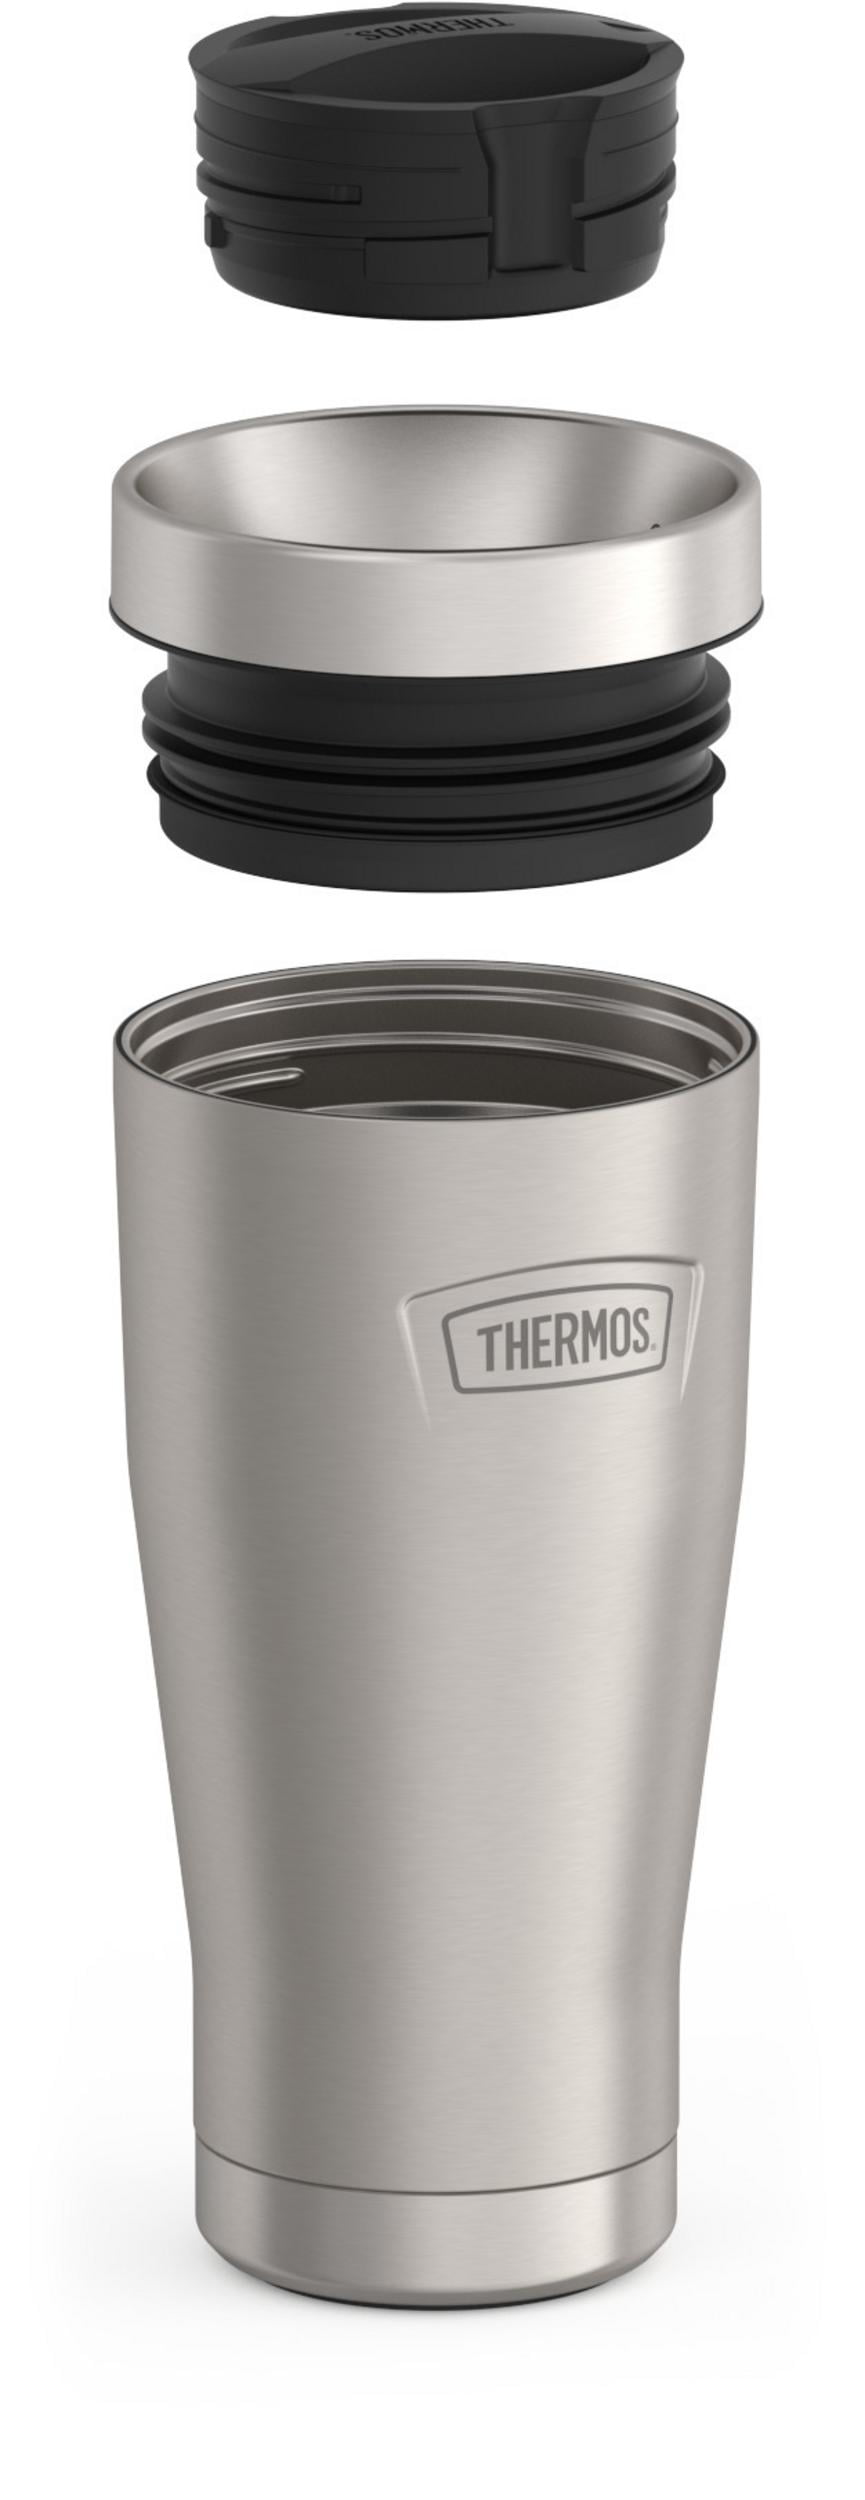 Thermos Steel Vacuumware Tumbler - Silver/Black, 16 oz - Ralphs